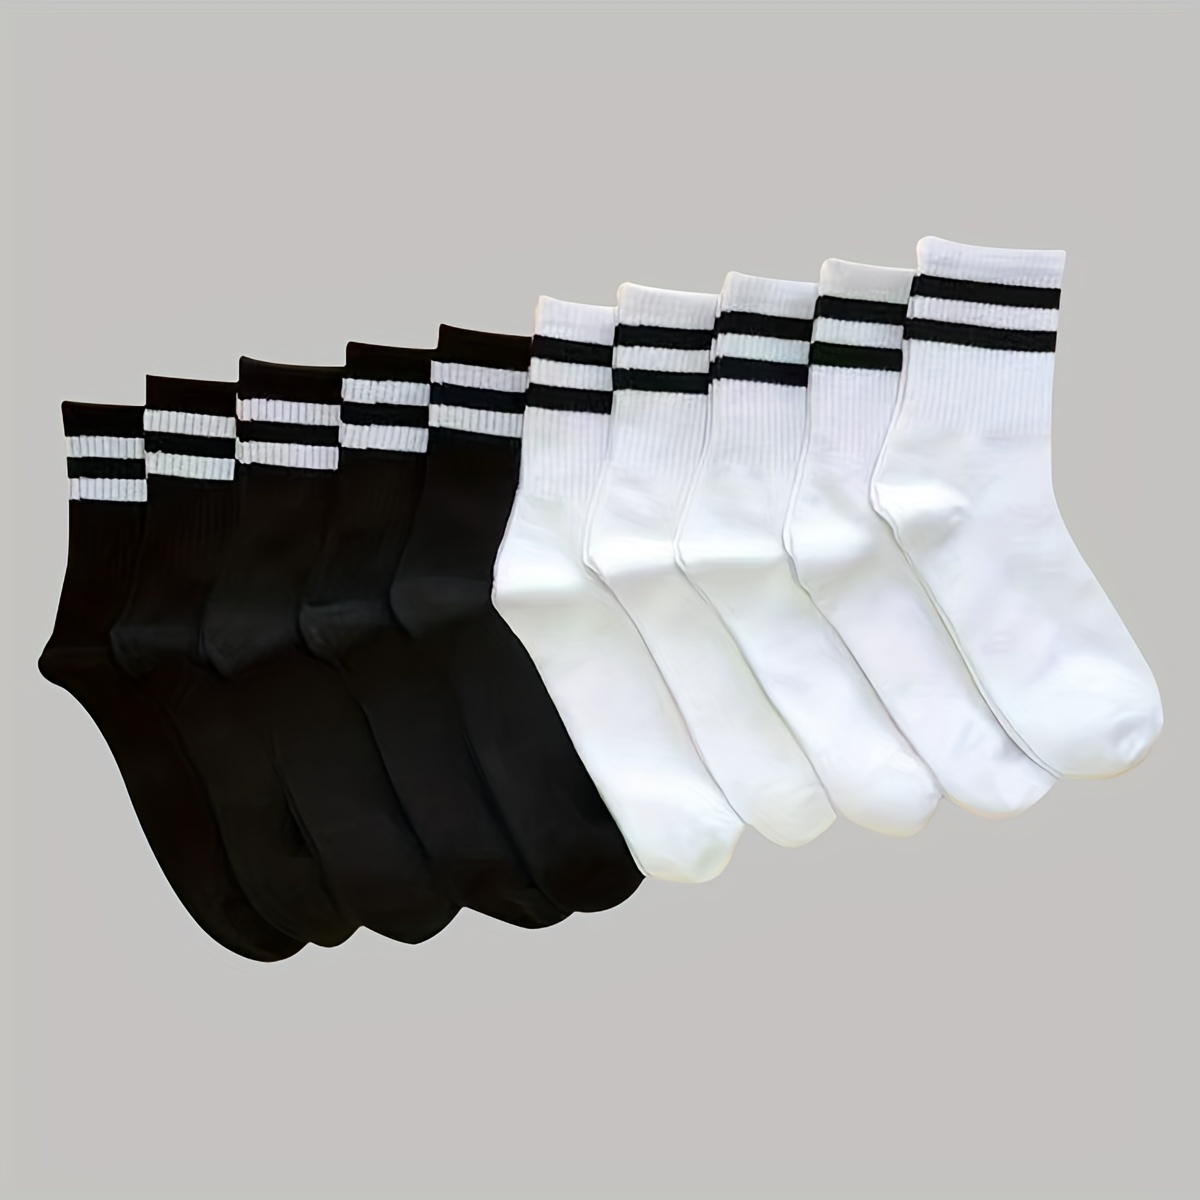 

10 Pairs Striped Crew Socks, Sports & Breathable Unisex Mid-calf Socks, Women's Stockings & Hosiery